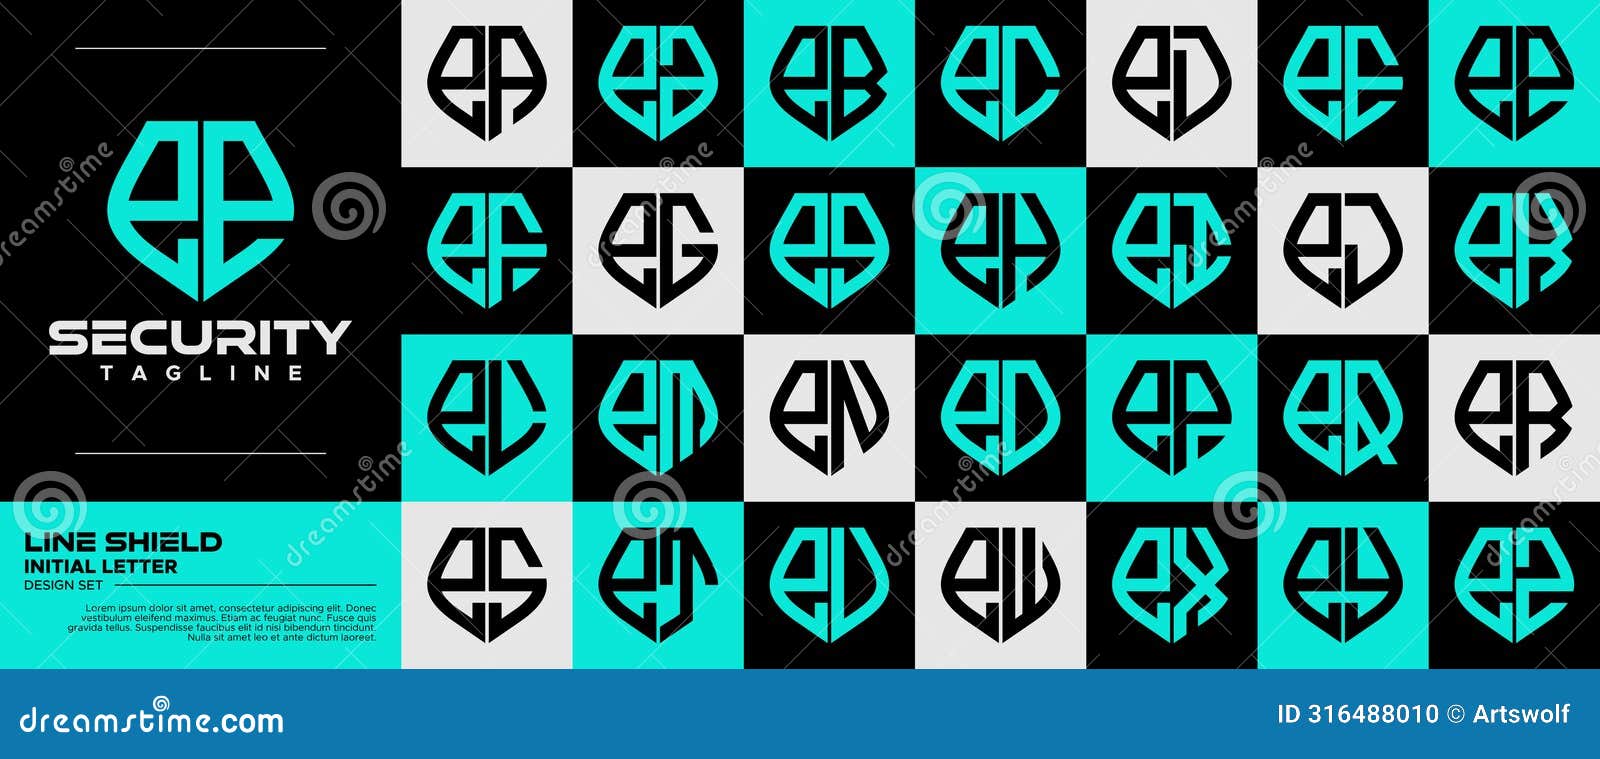 line technology shield lowercase letter e ee logo bundle